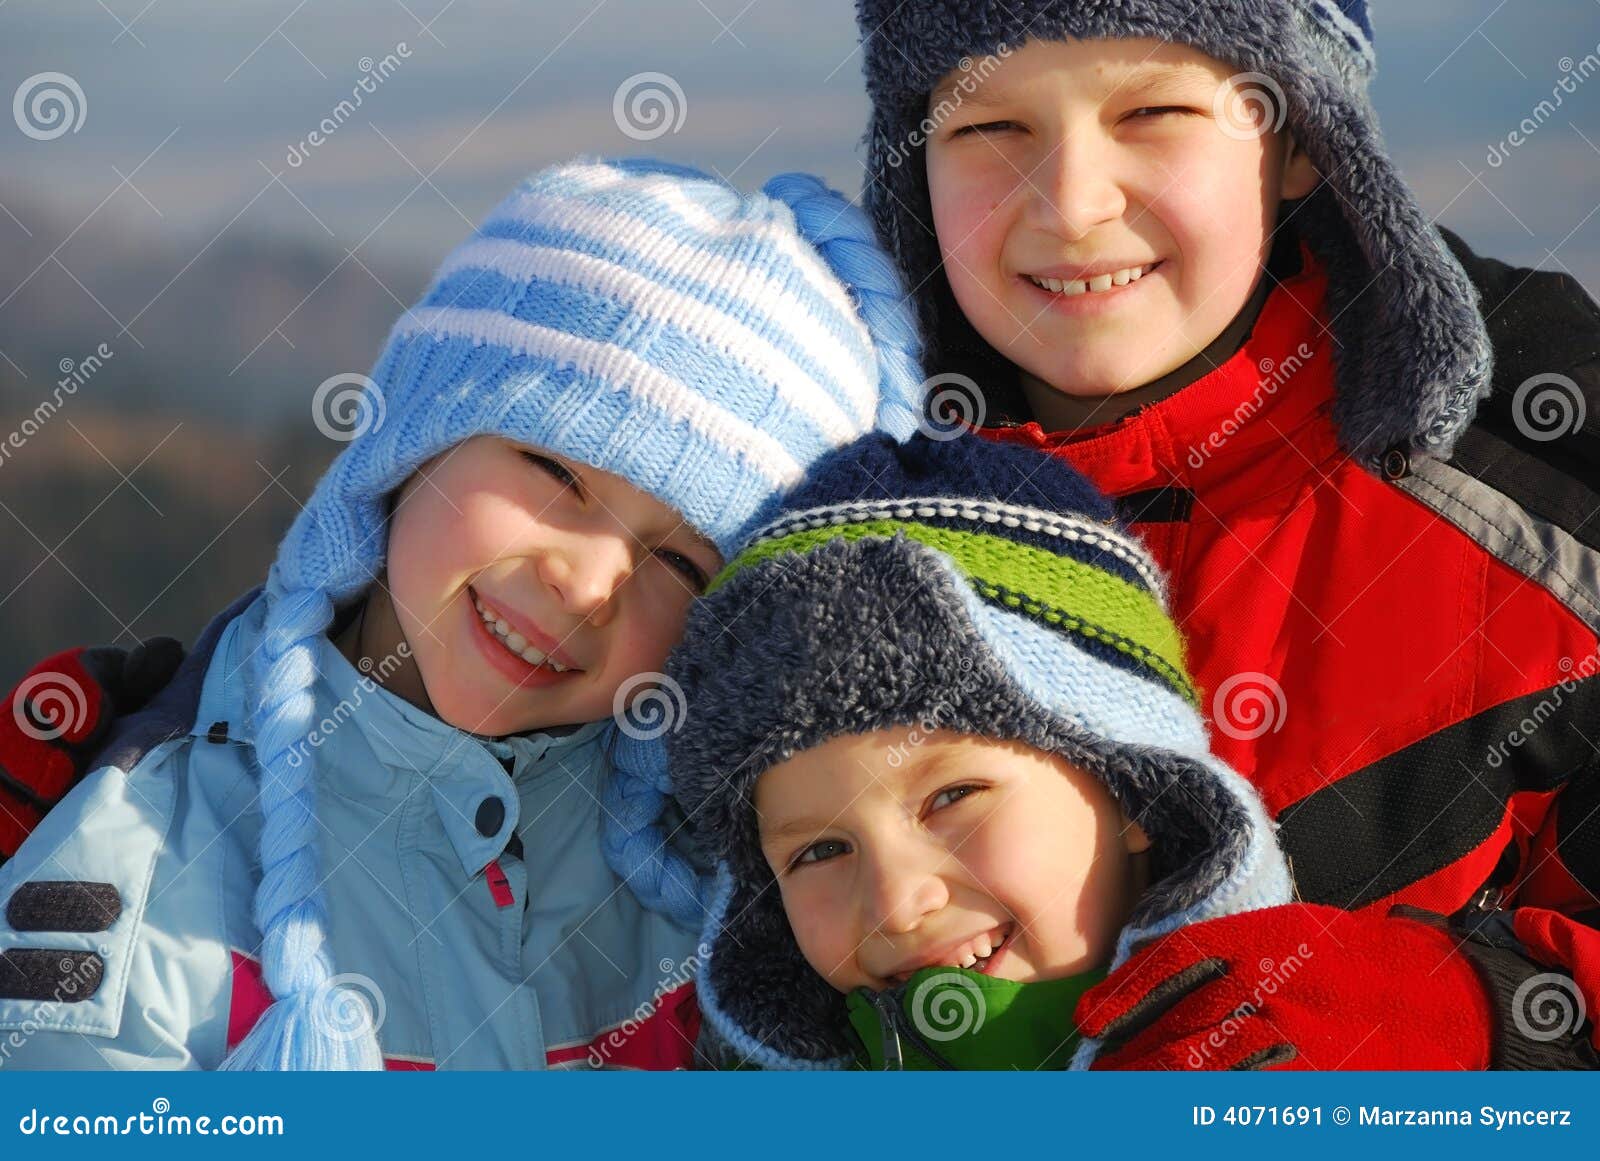 1,808 Boys Winter Clothes Stock Photos - Free & Royalty-Free Stock